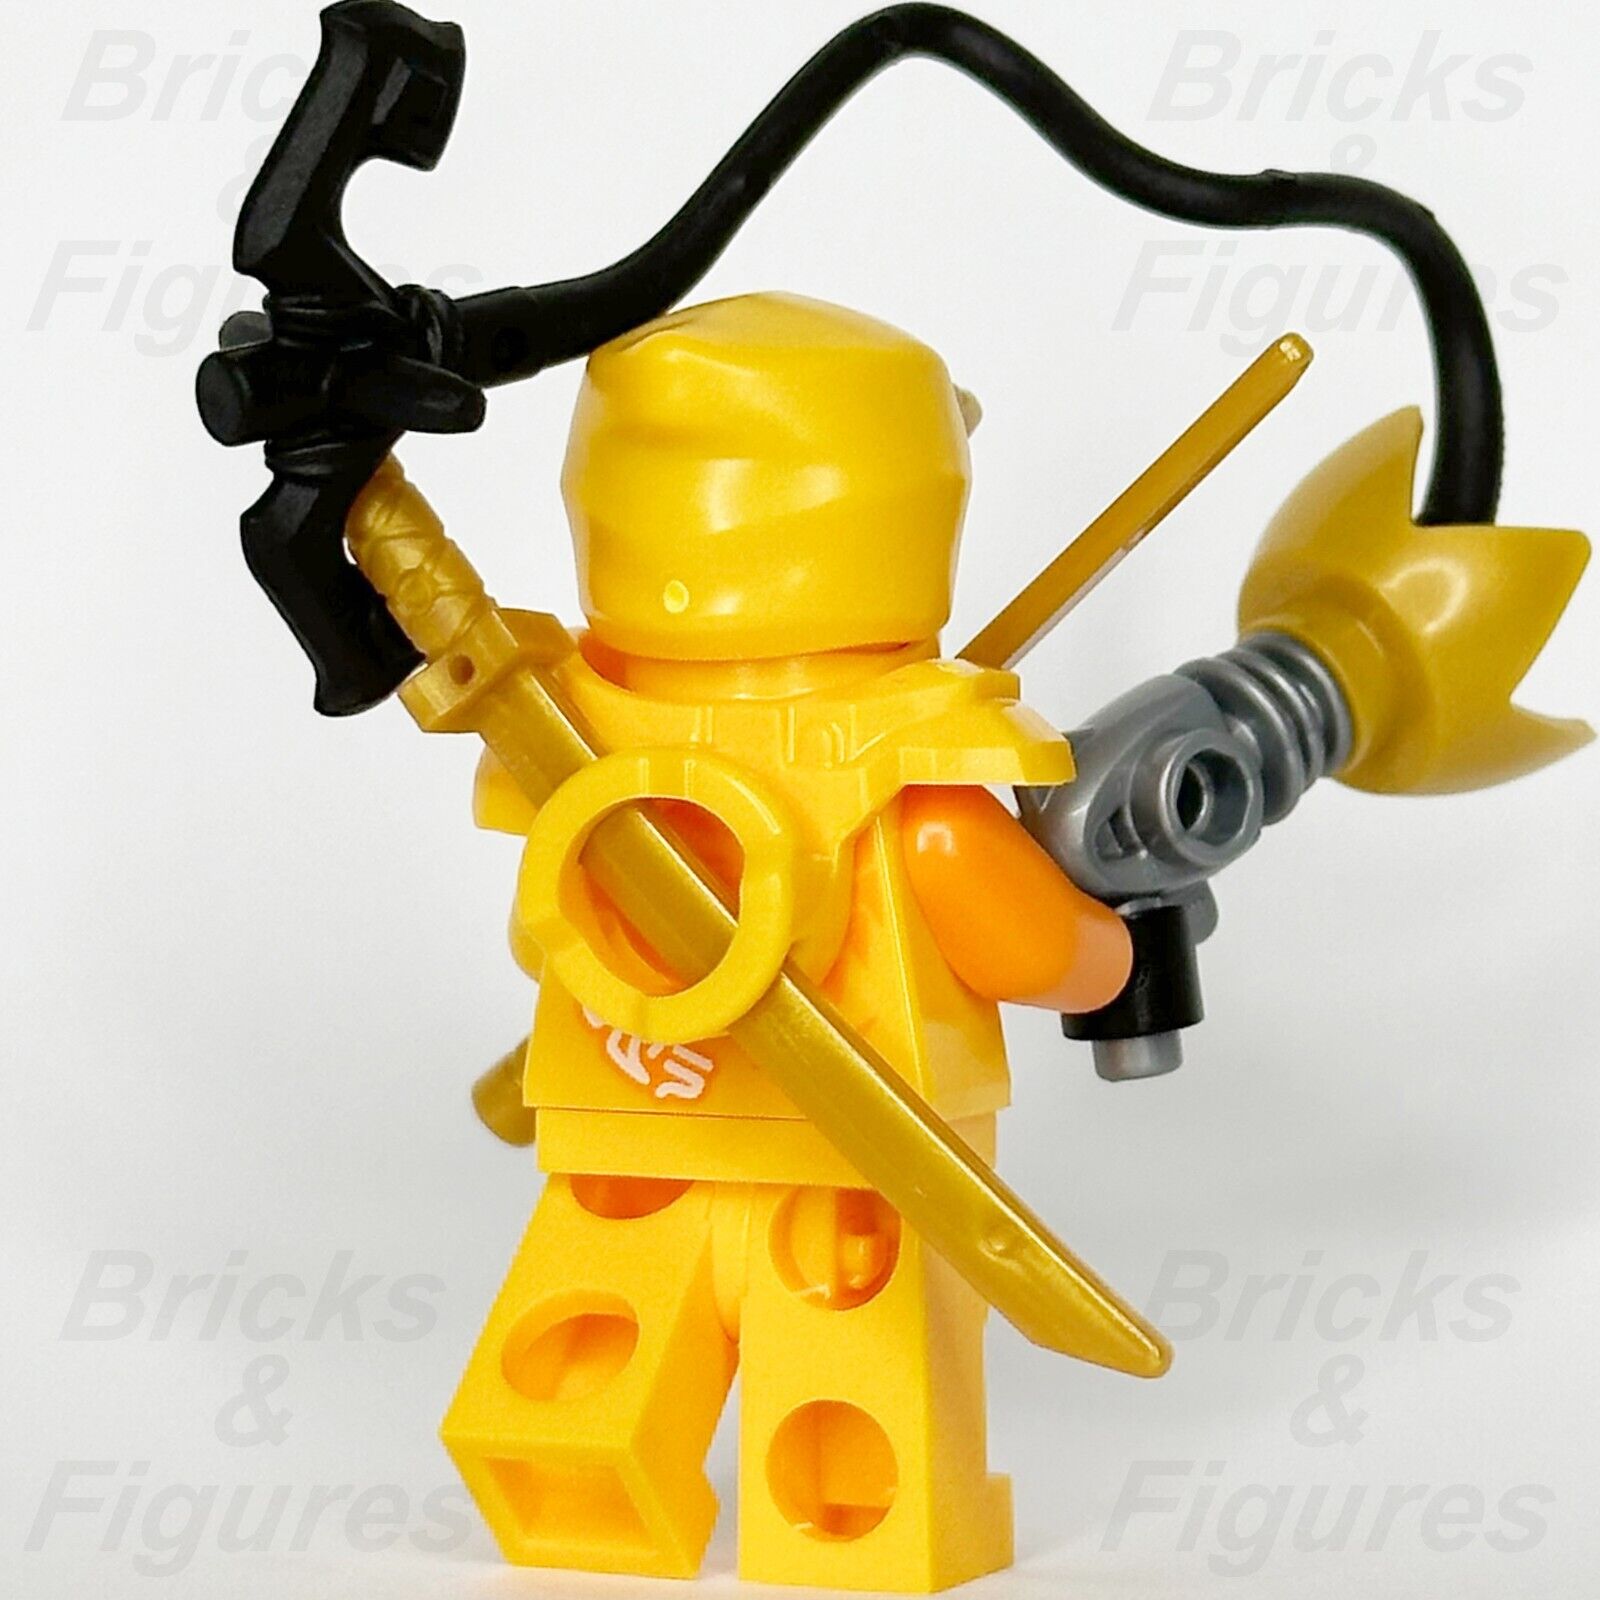 LEGO DC Super Villains Custom Builds - Captain James Hook (Disney